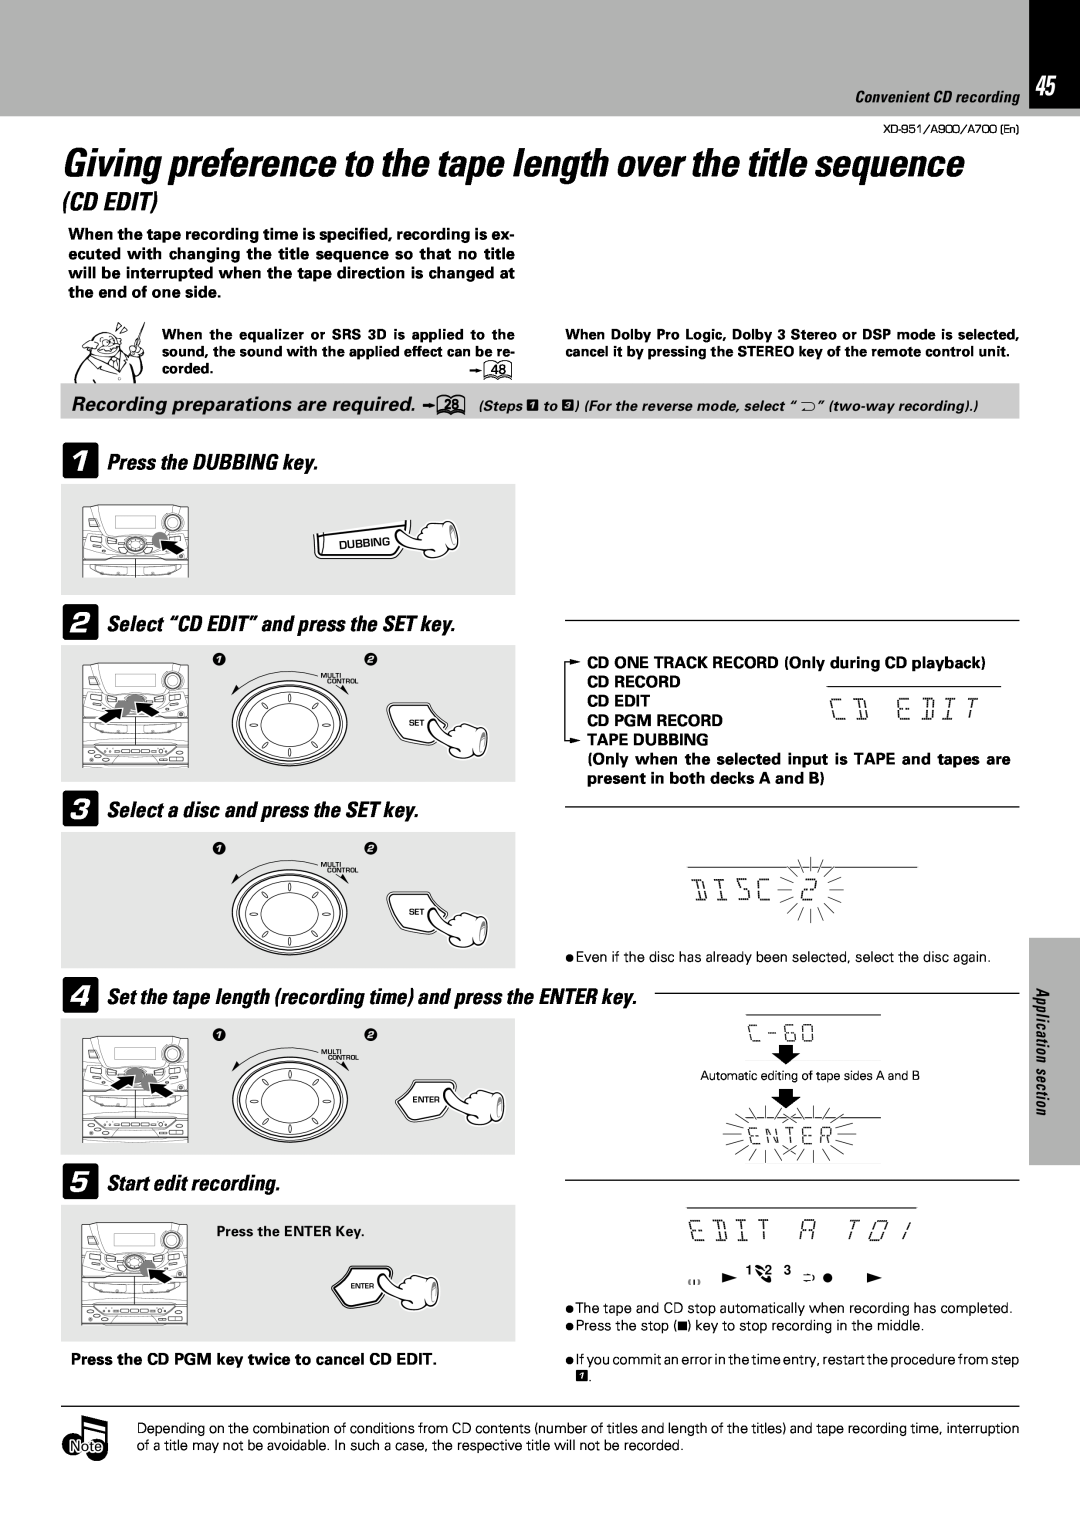 Kenwood XD-951 Cd E Di T, A T, Cd Edit, 2Select “CD EDIT” and press the SET key, 3Select a disc and press the SET key 